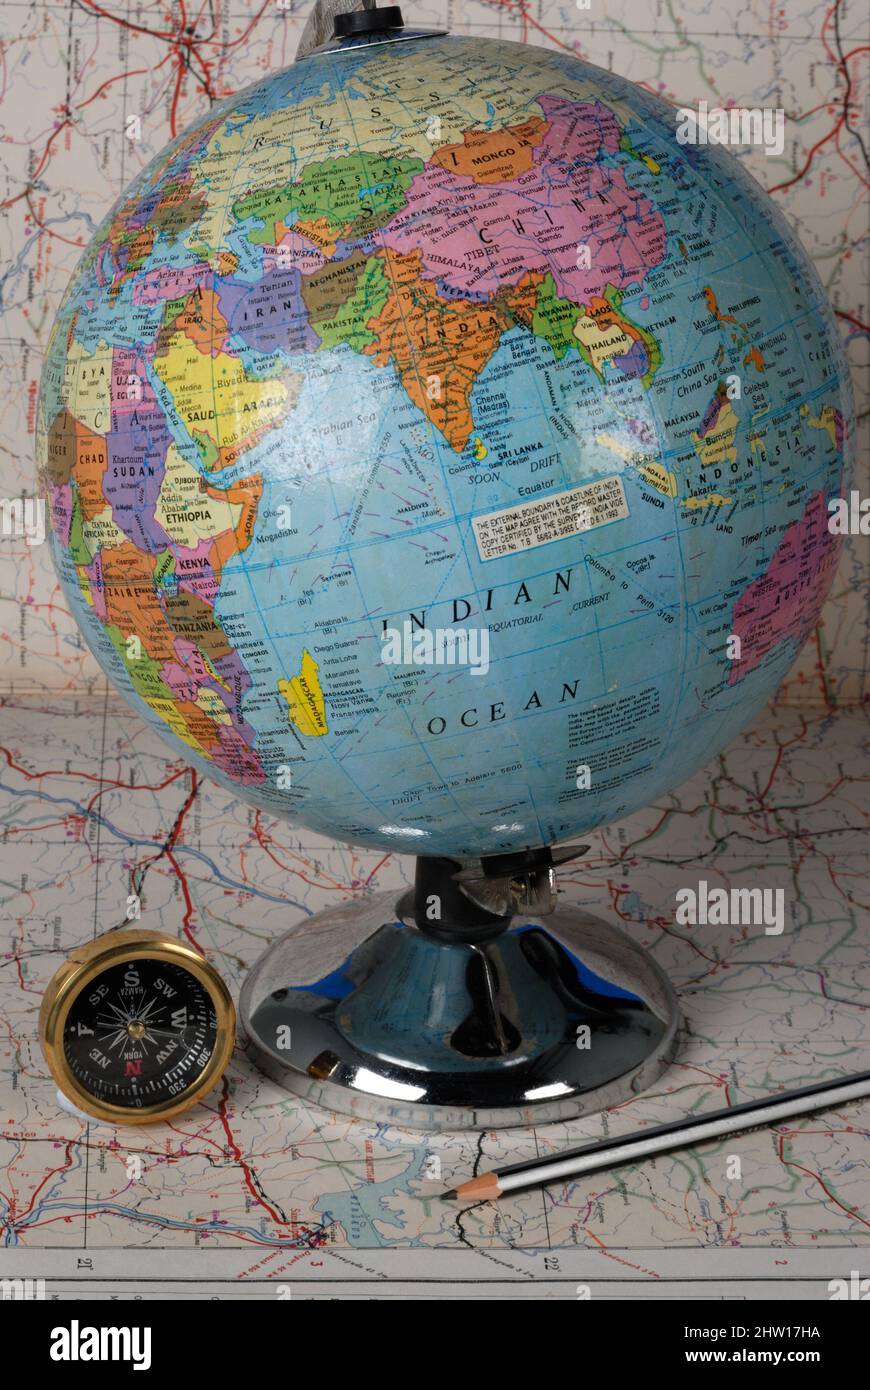 Mumbai, Maharashtra, India, Asia, July. 03, 2006 - Orientation Concept Earth and Compass on a world map Stock Photo